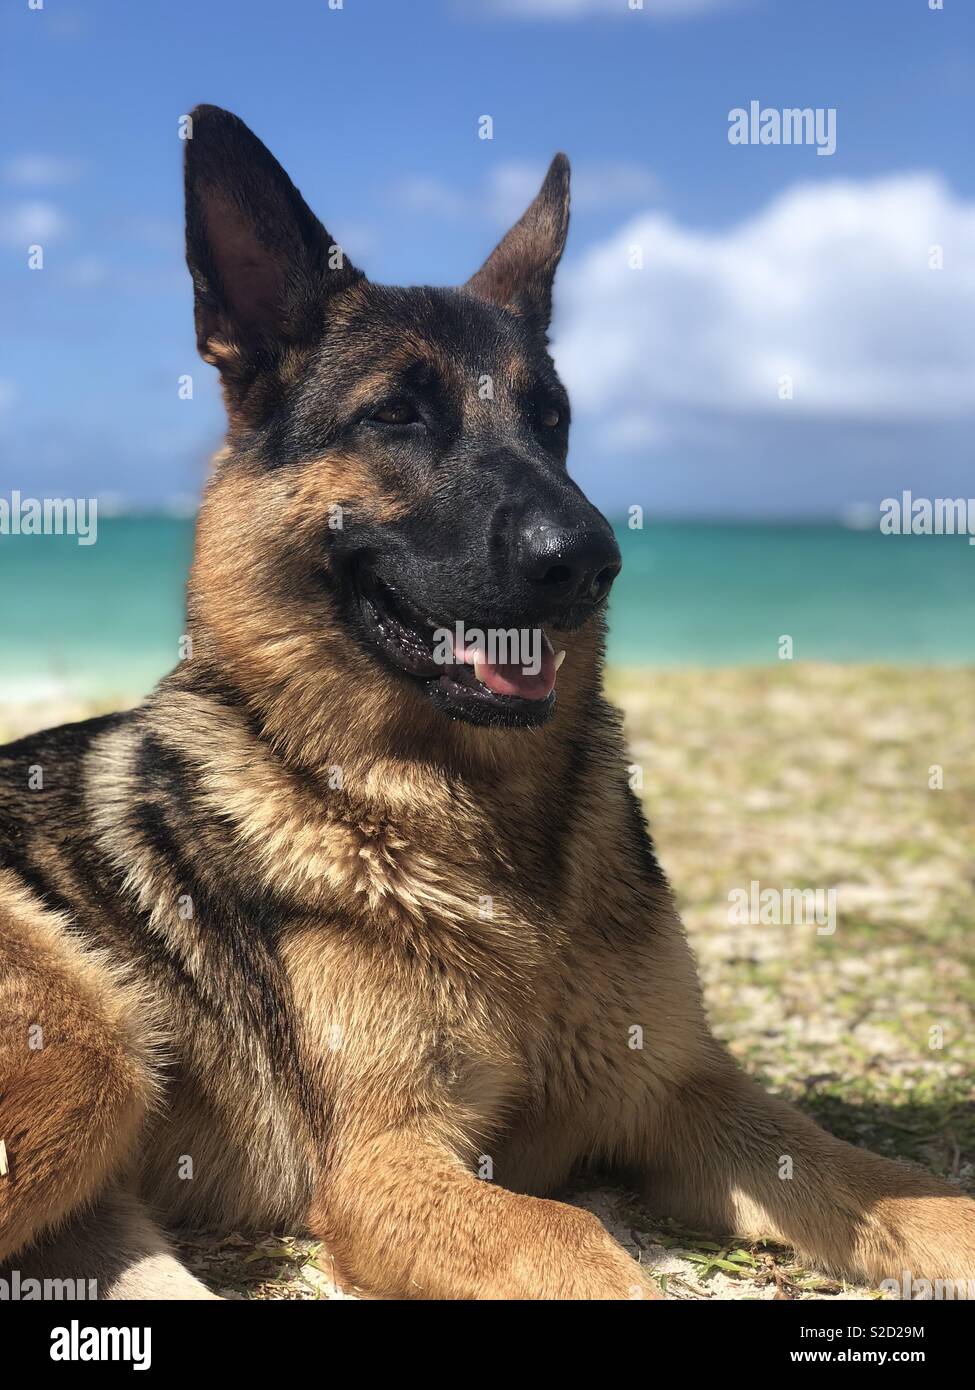 Alsatian / German Shepherd dog on beach in Mauritius Stock Photo